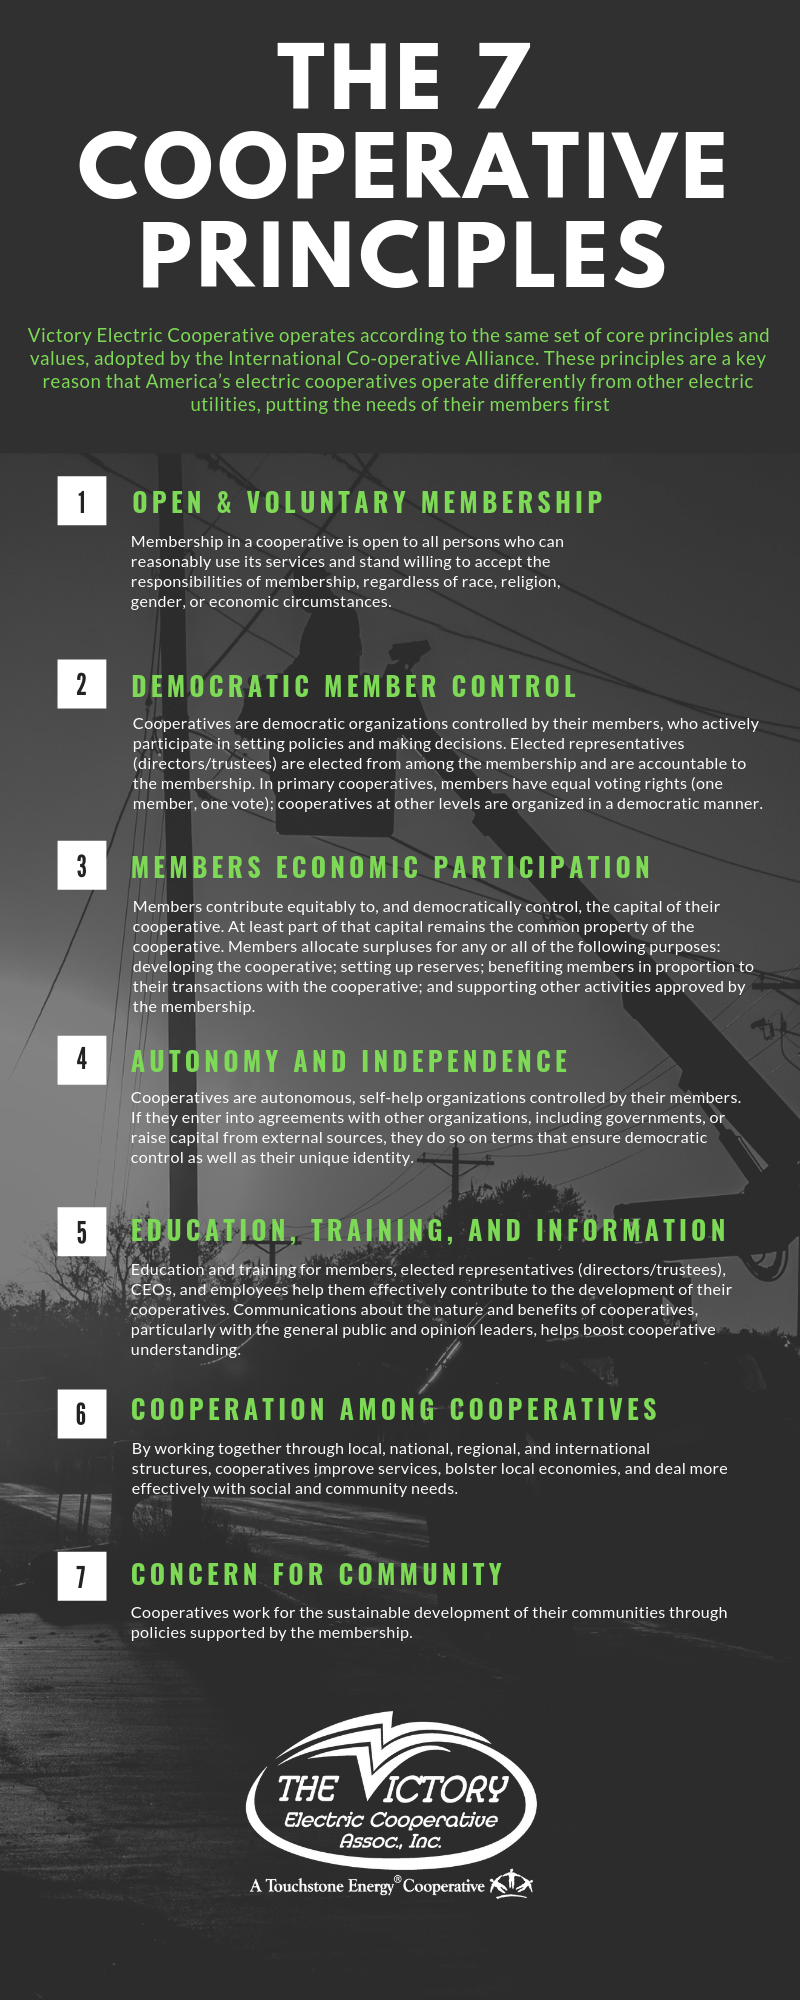 The 7 Cooperative Principles